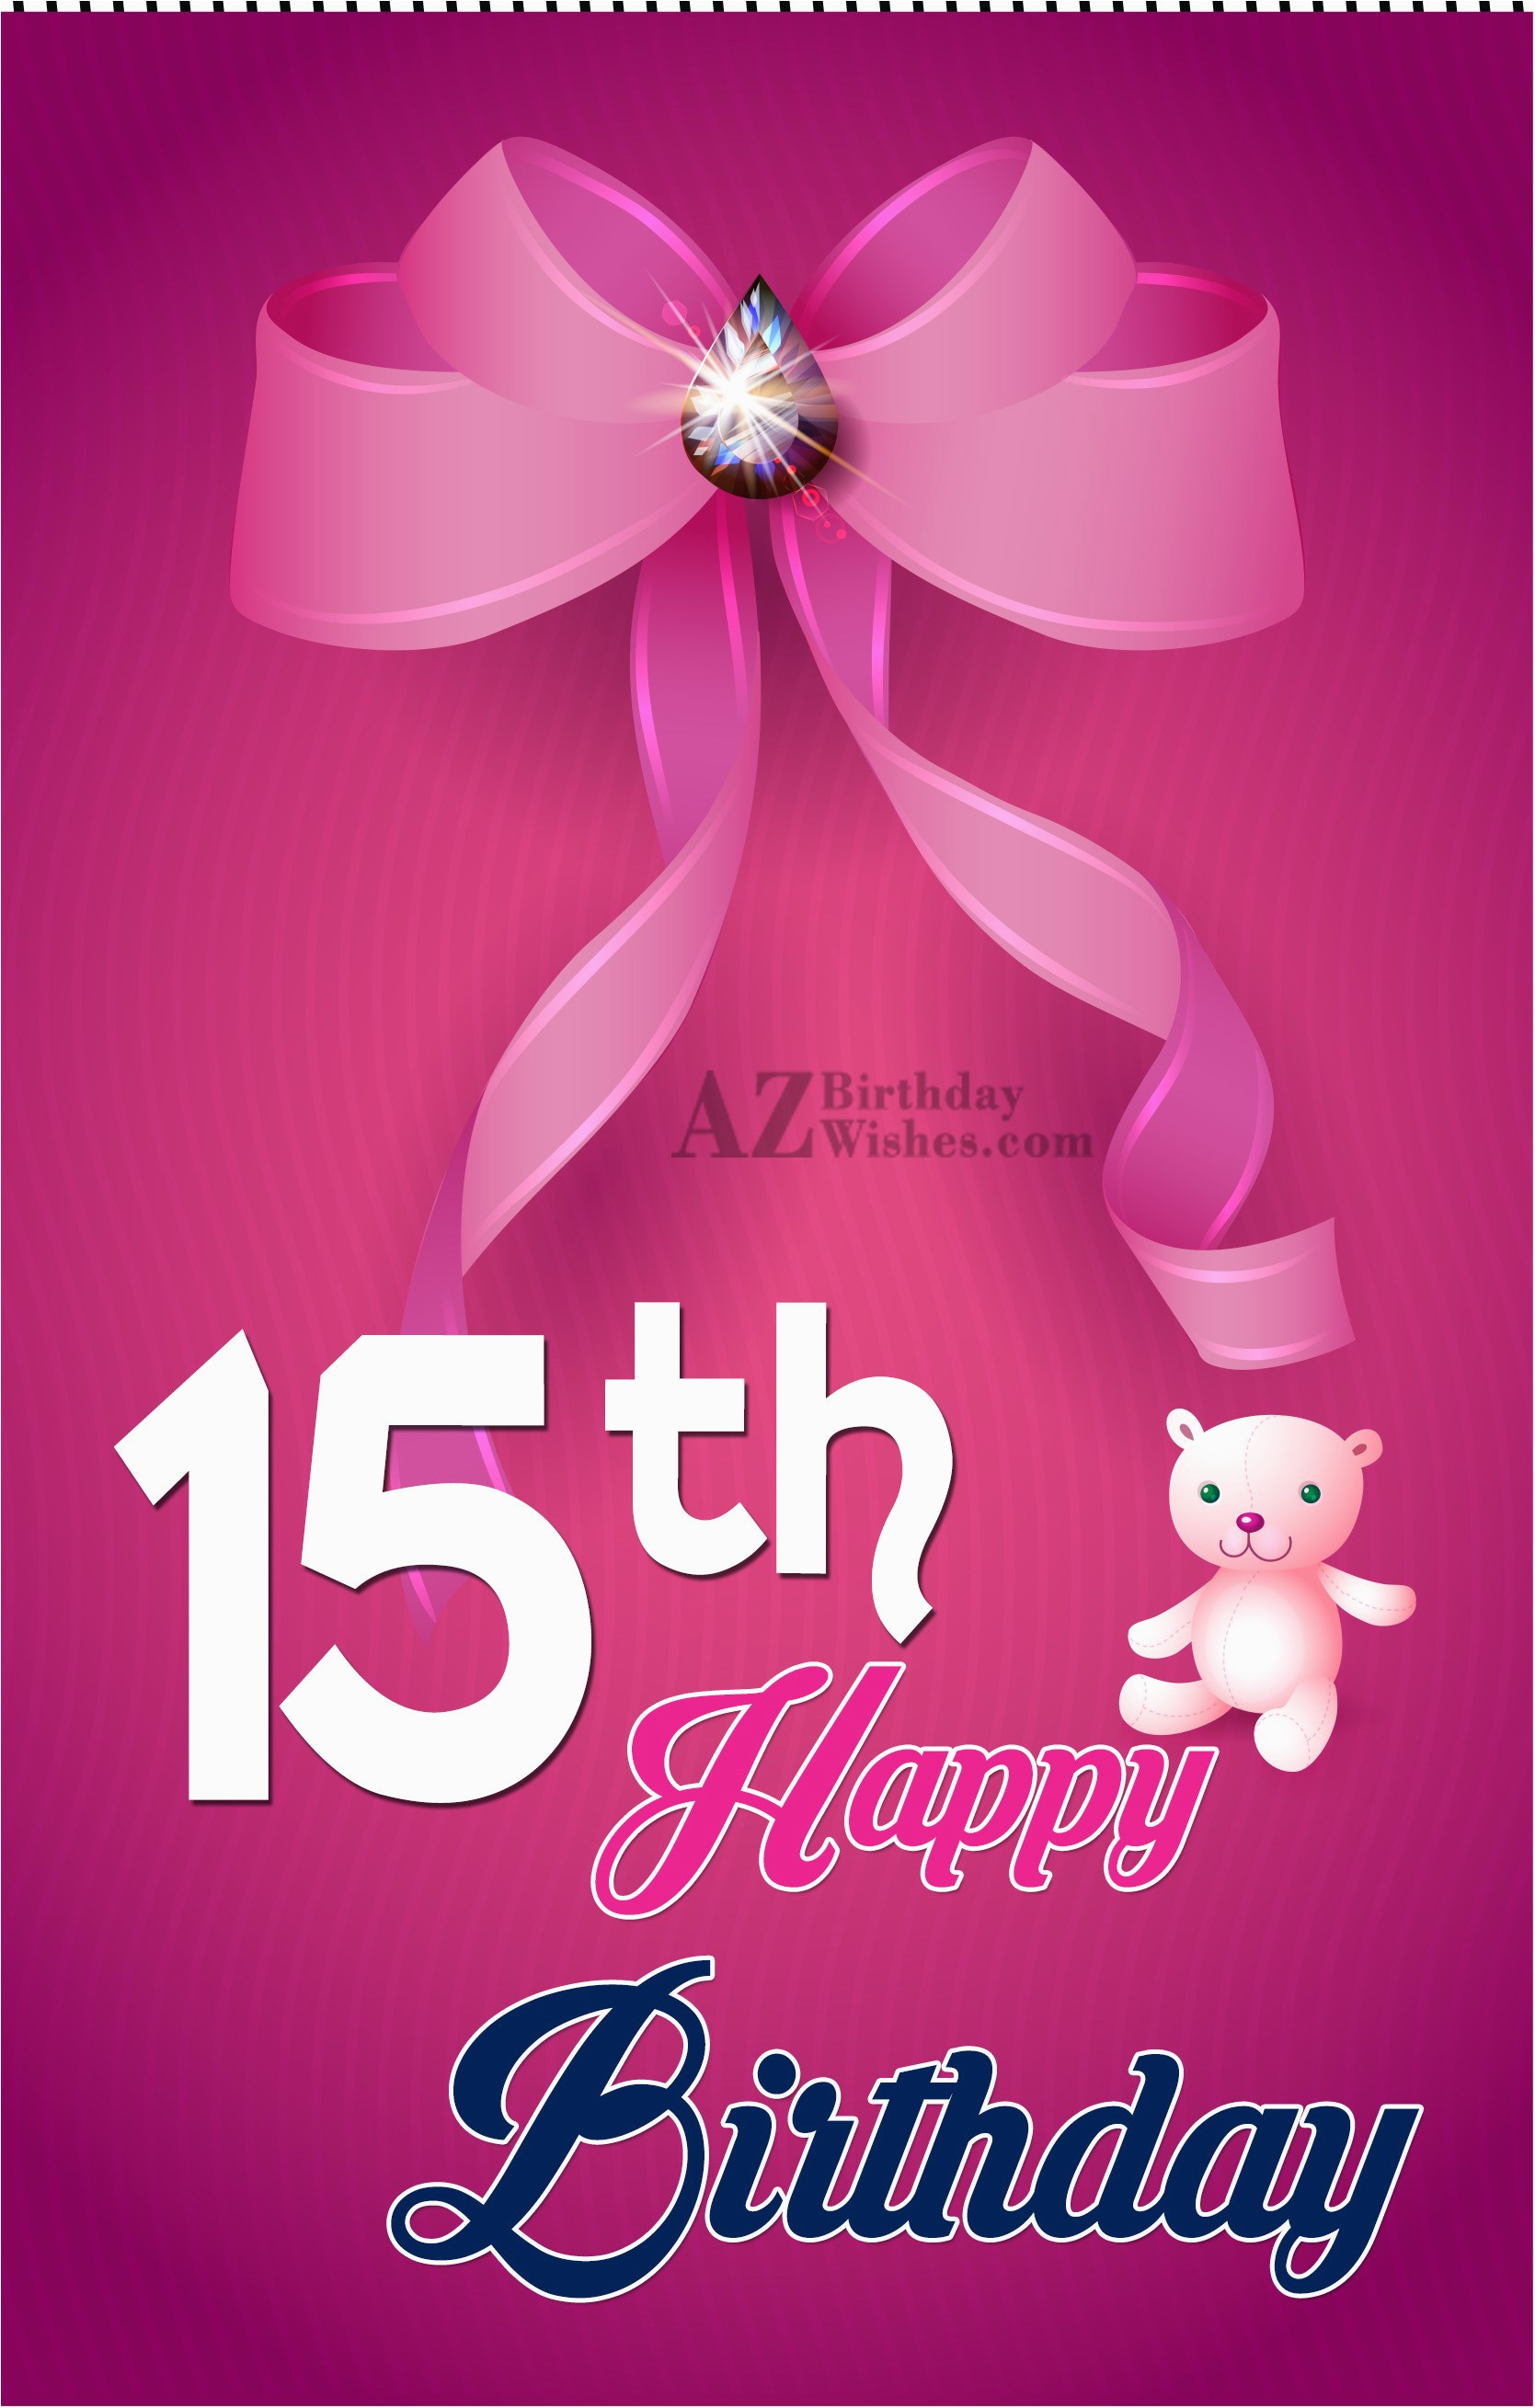 15th birthday wishes